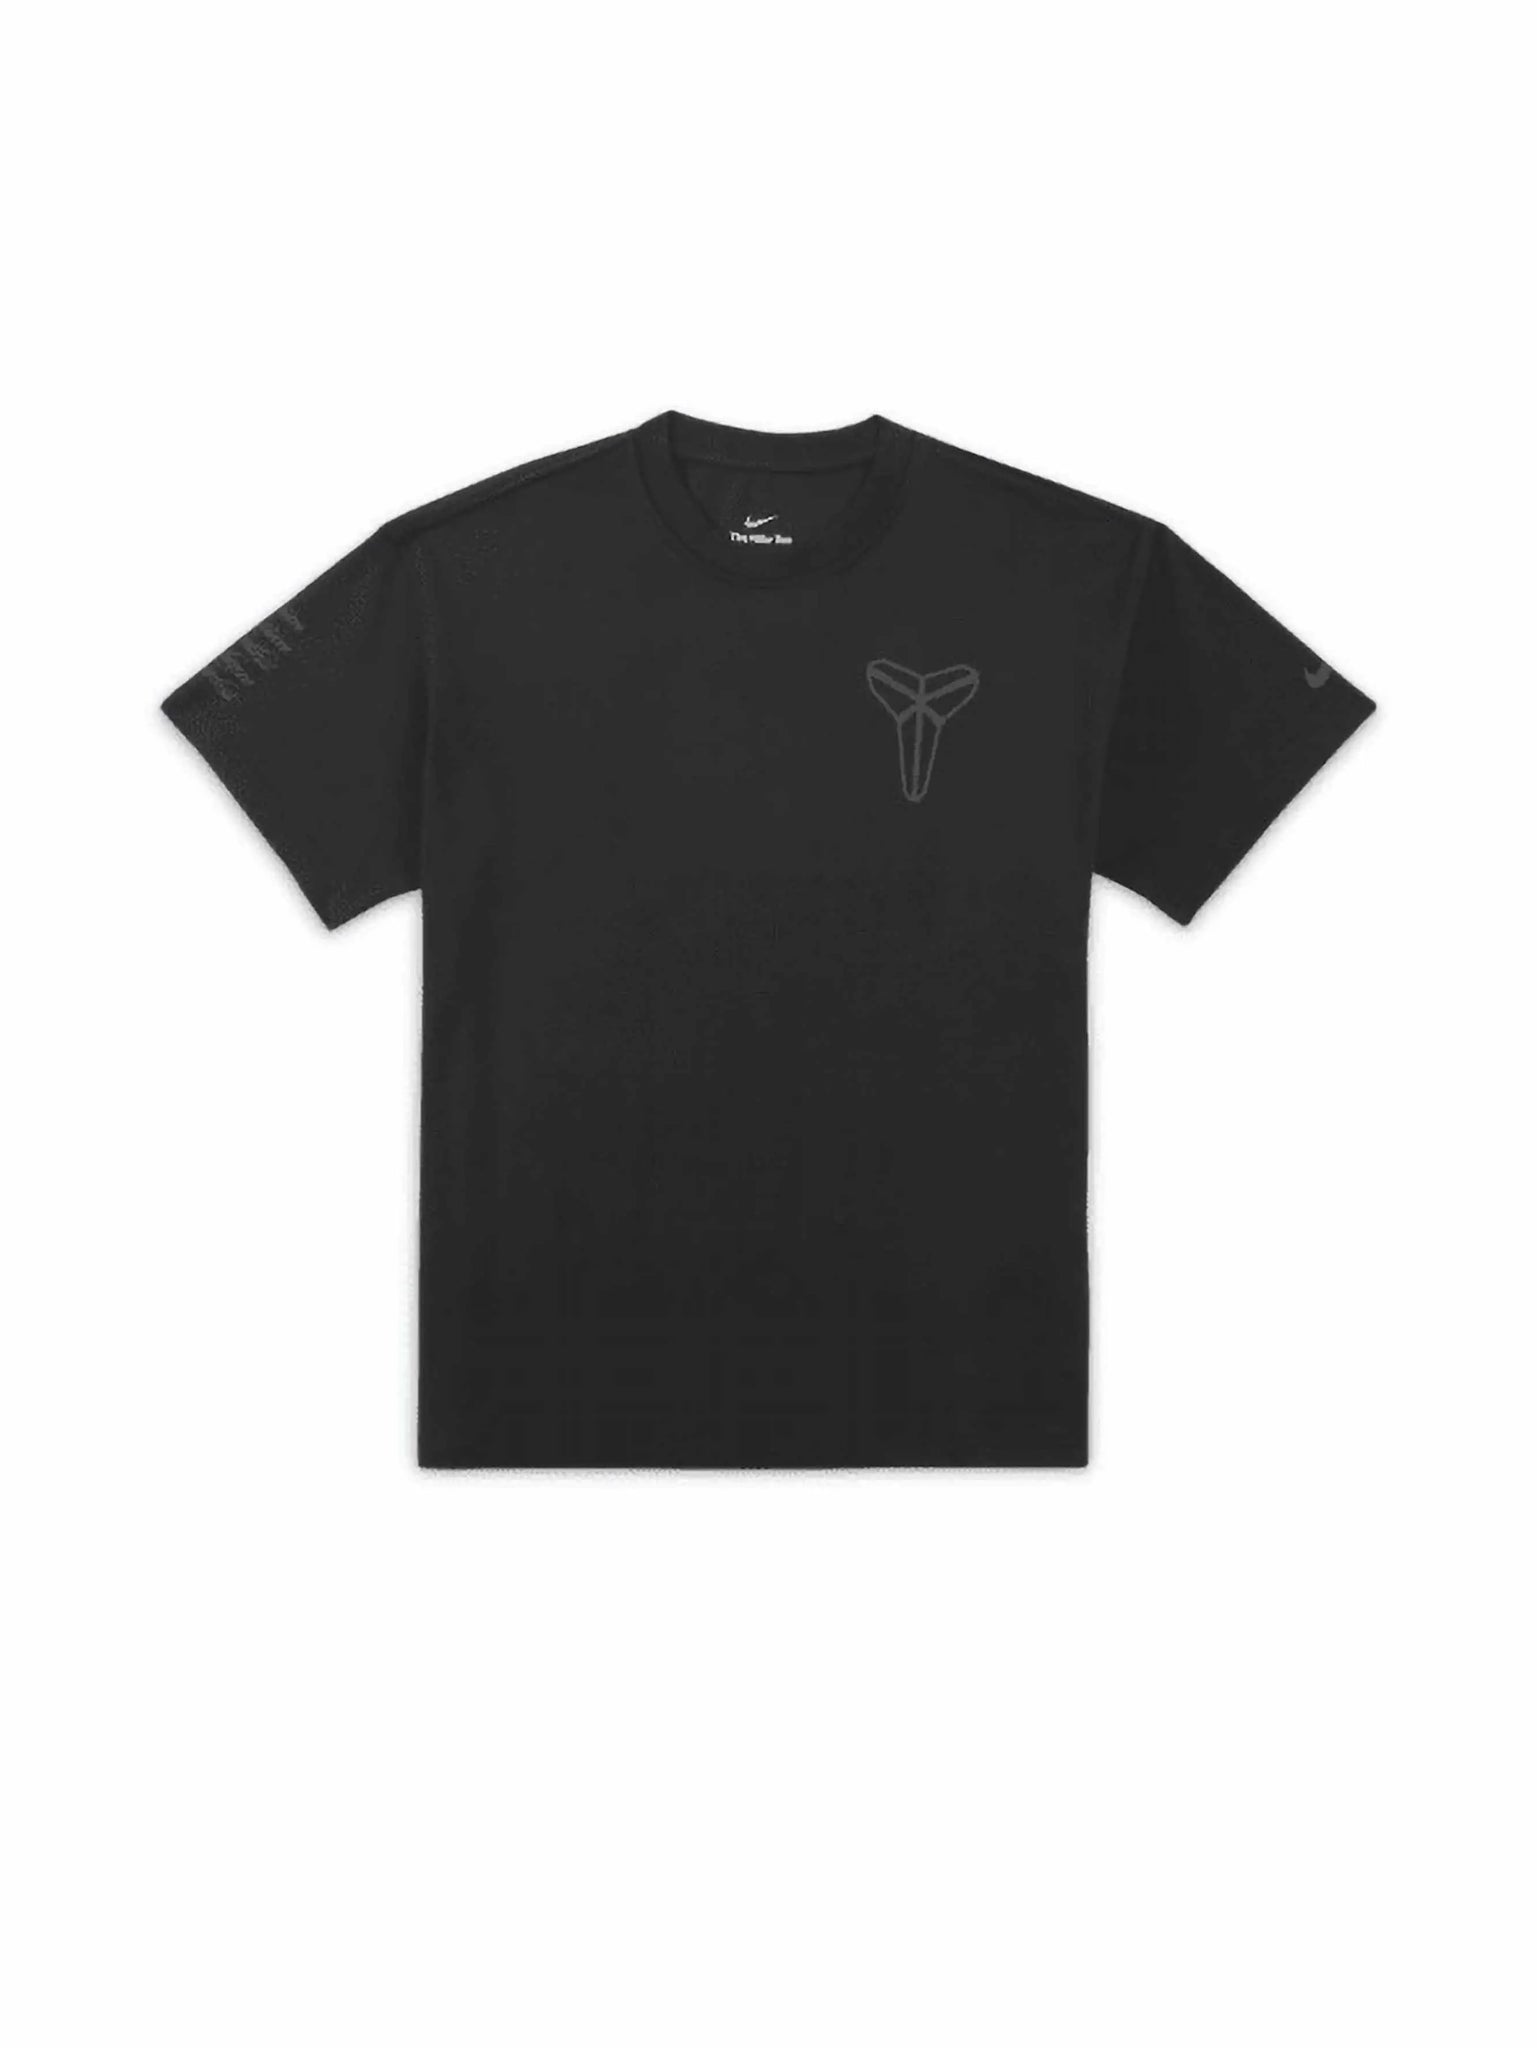 Nike Kobe Mamba Mentality T-shirt Black in Auckland, New Zealand - Shop name